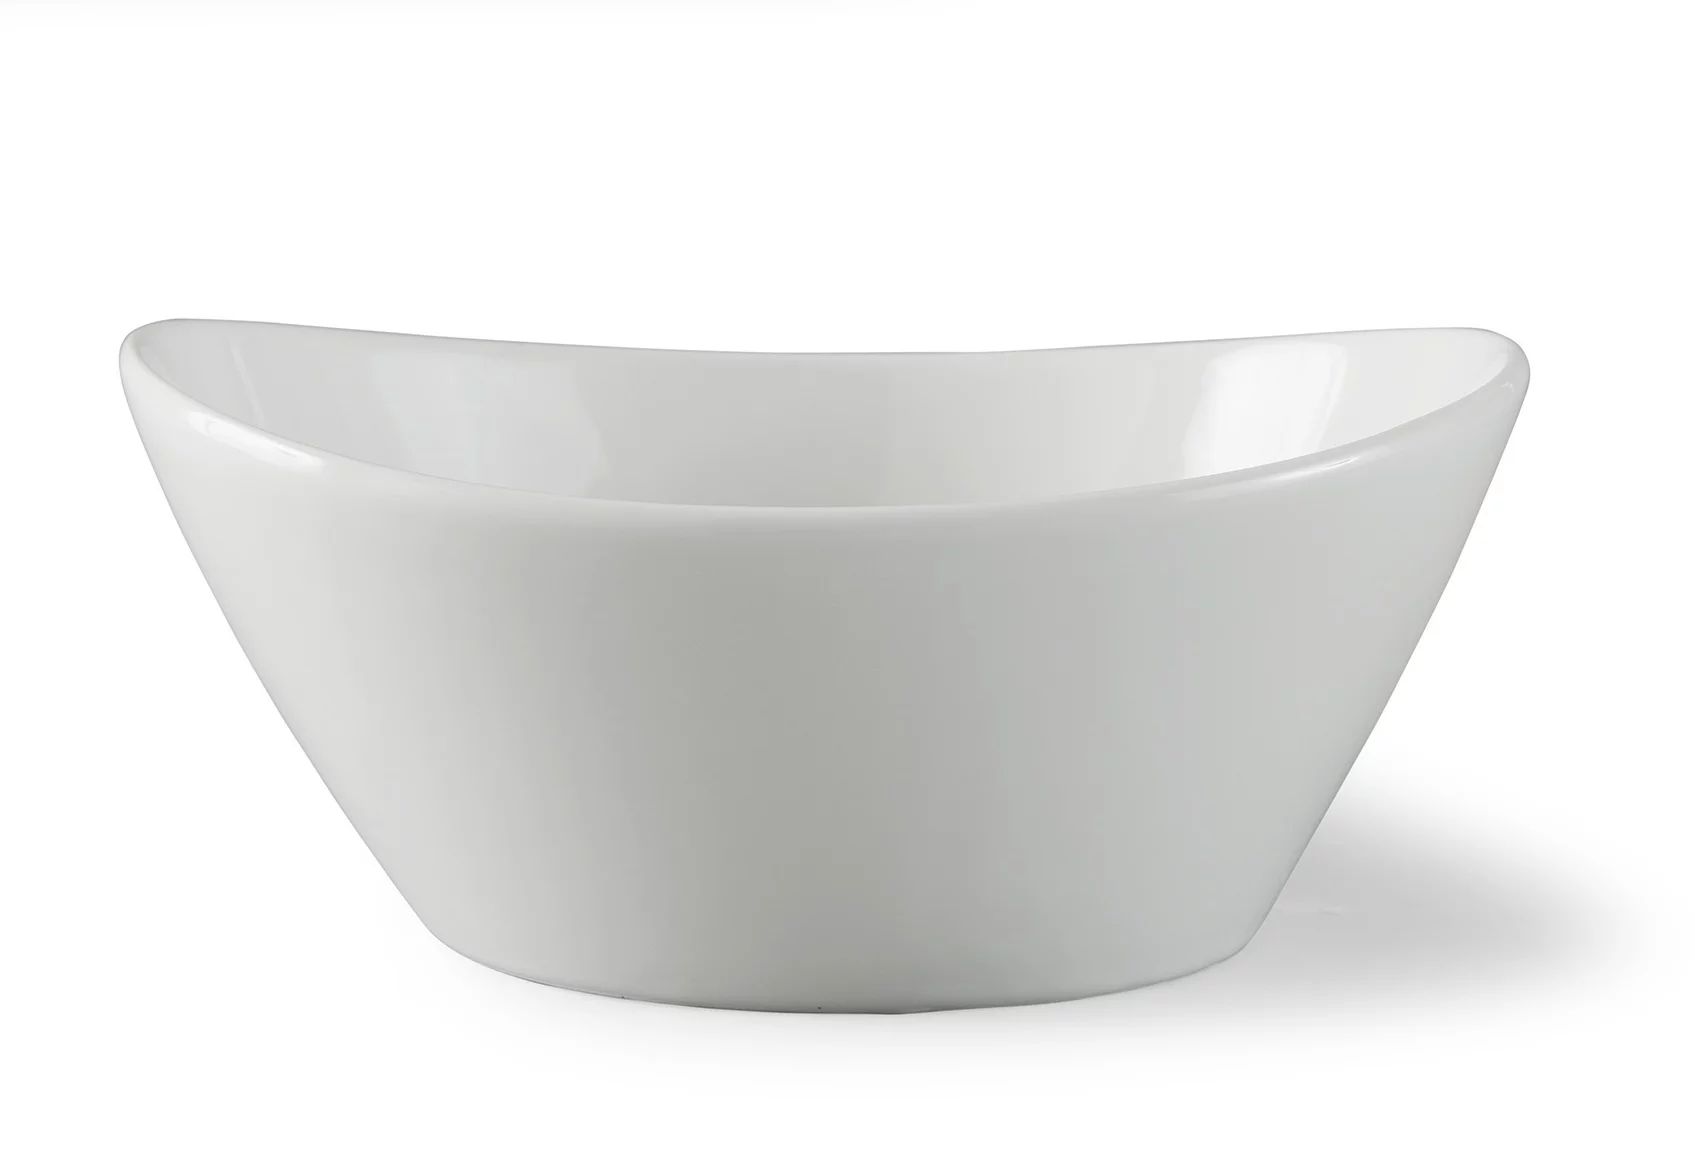 Better Homes & Gardens White Porcelain Wavy Serve Bowl | Walmart (US)